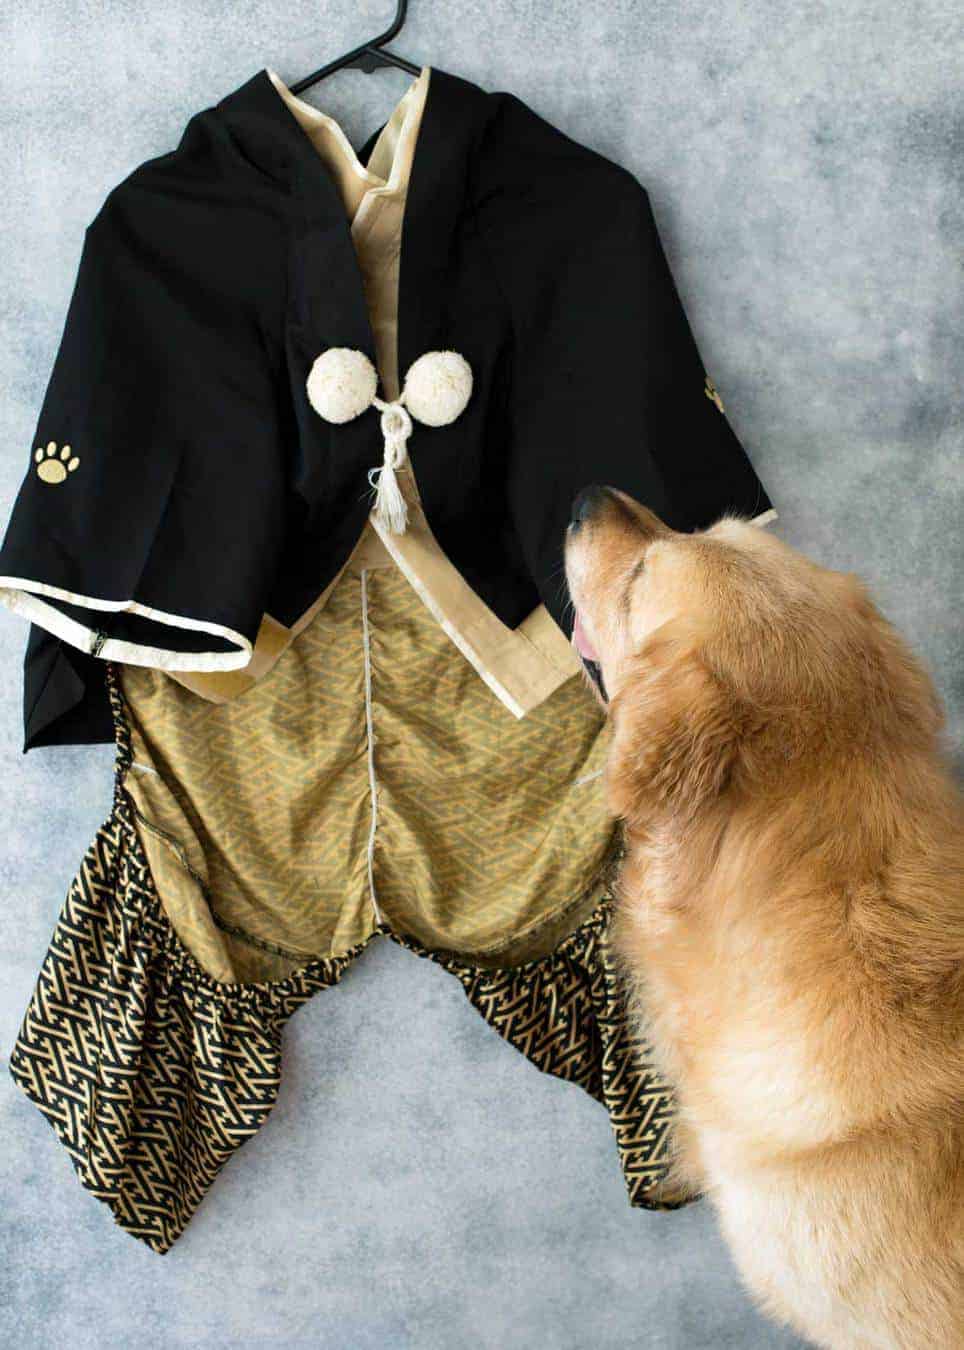 The golden retriever Dozer was scared looking at the dog's kimono